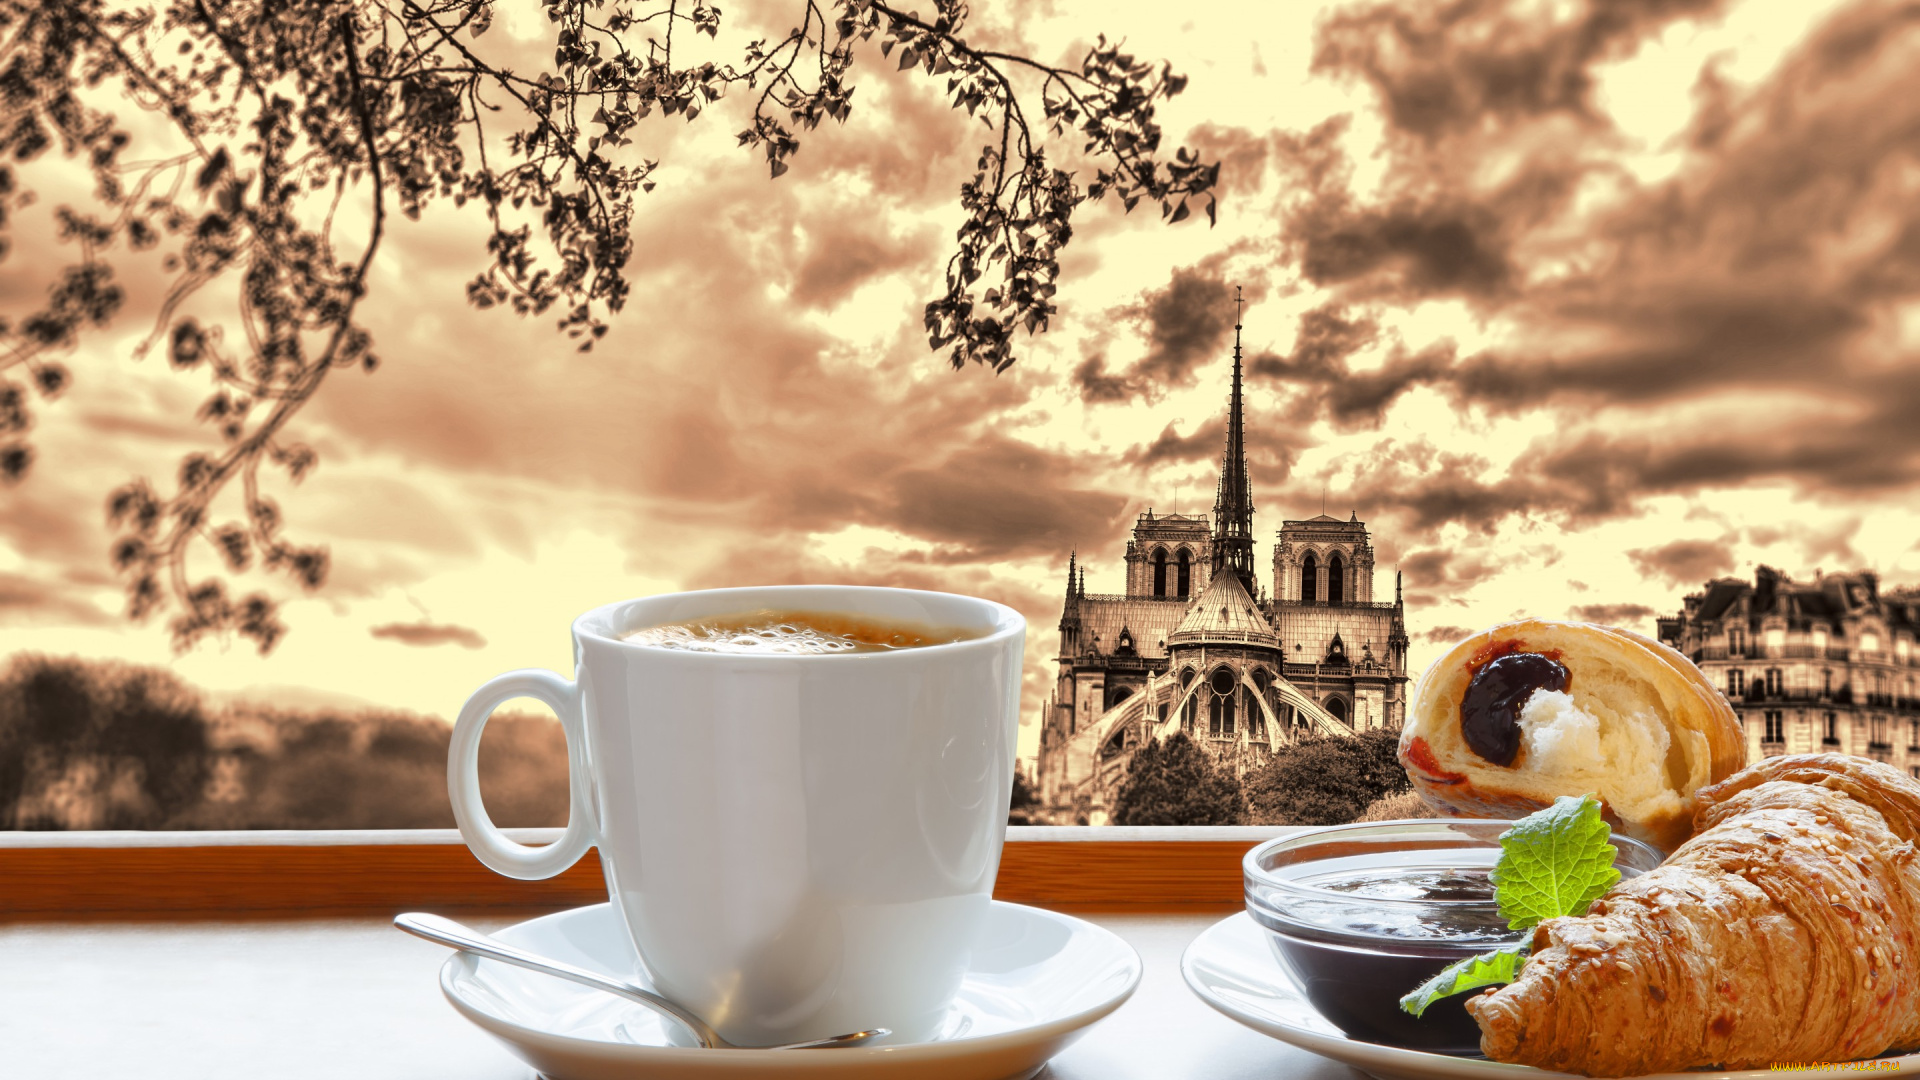 еда, кофе, , кофейные, зёрна, croissant, cup, coffee, breakfast, пейзаж, круассан, завтрак, cathedral, notre, dame, france, paris, париж, джем